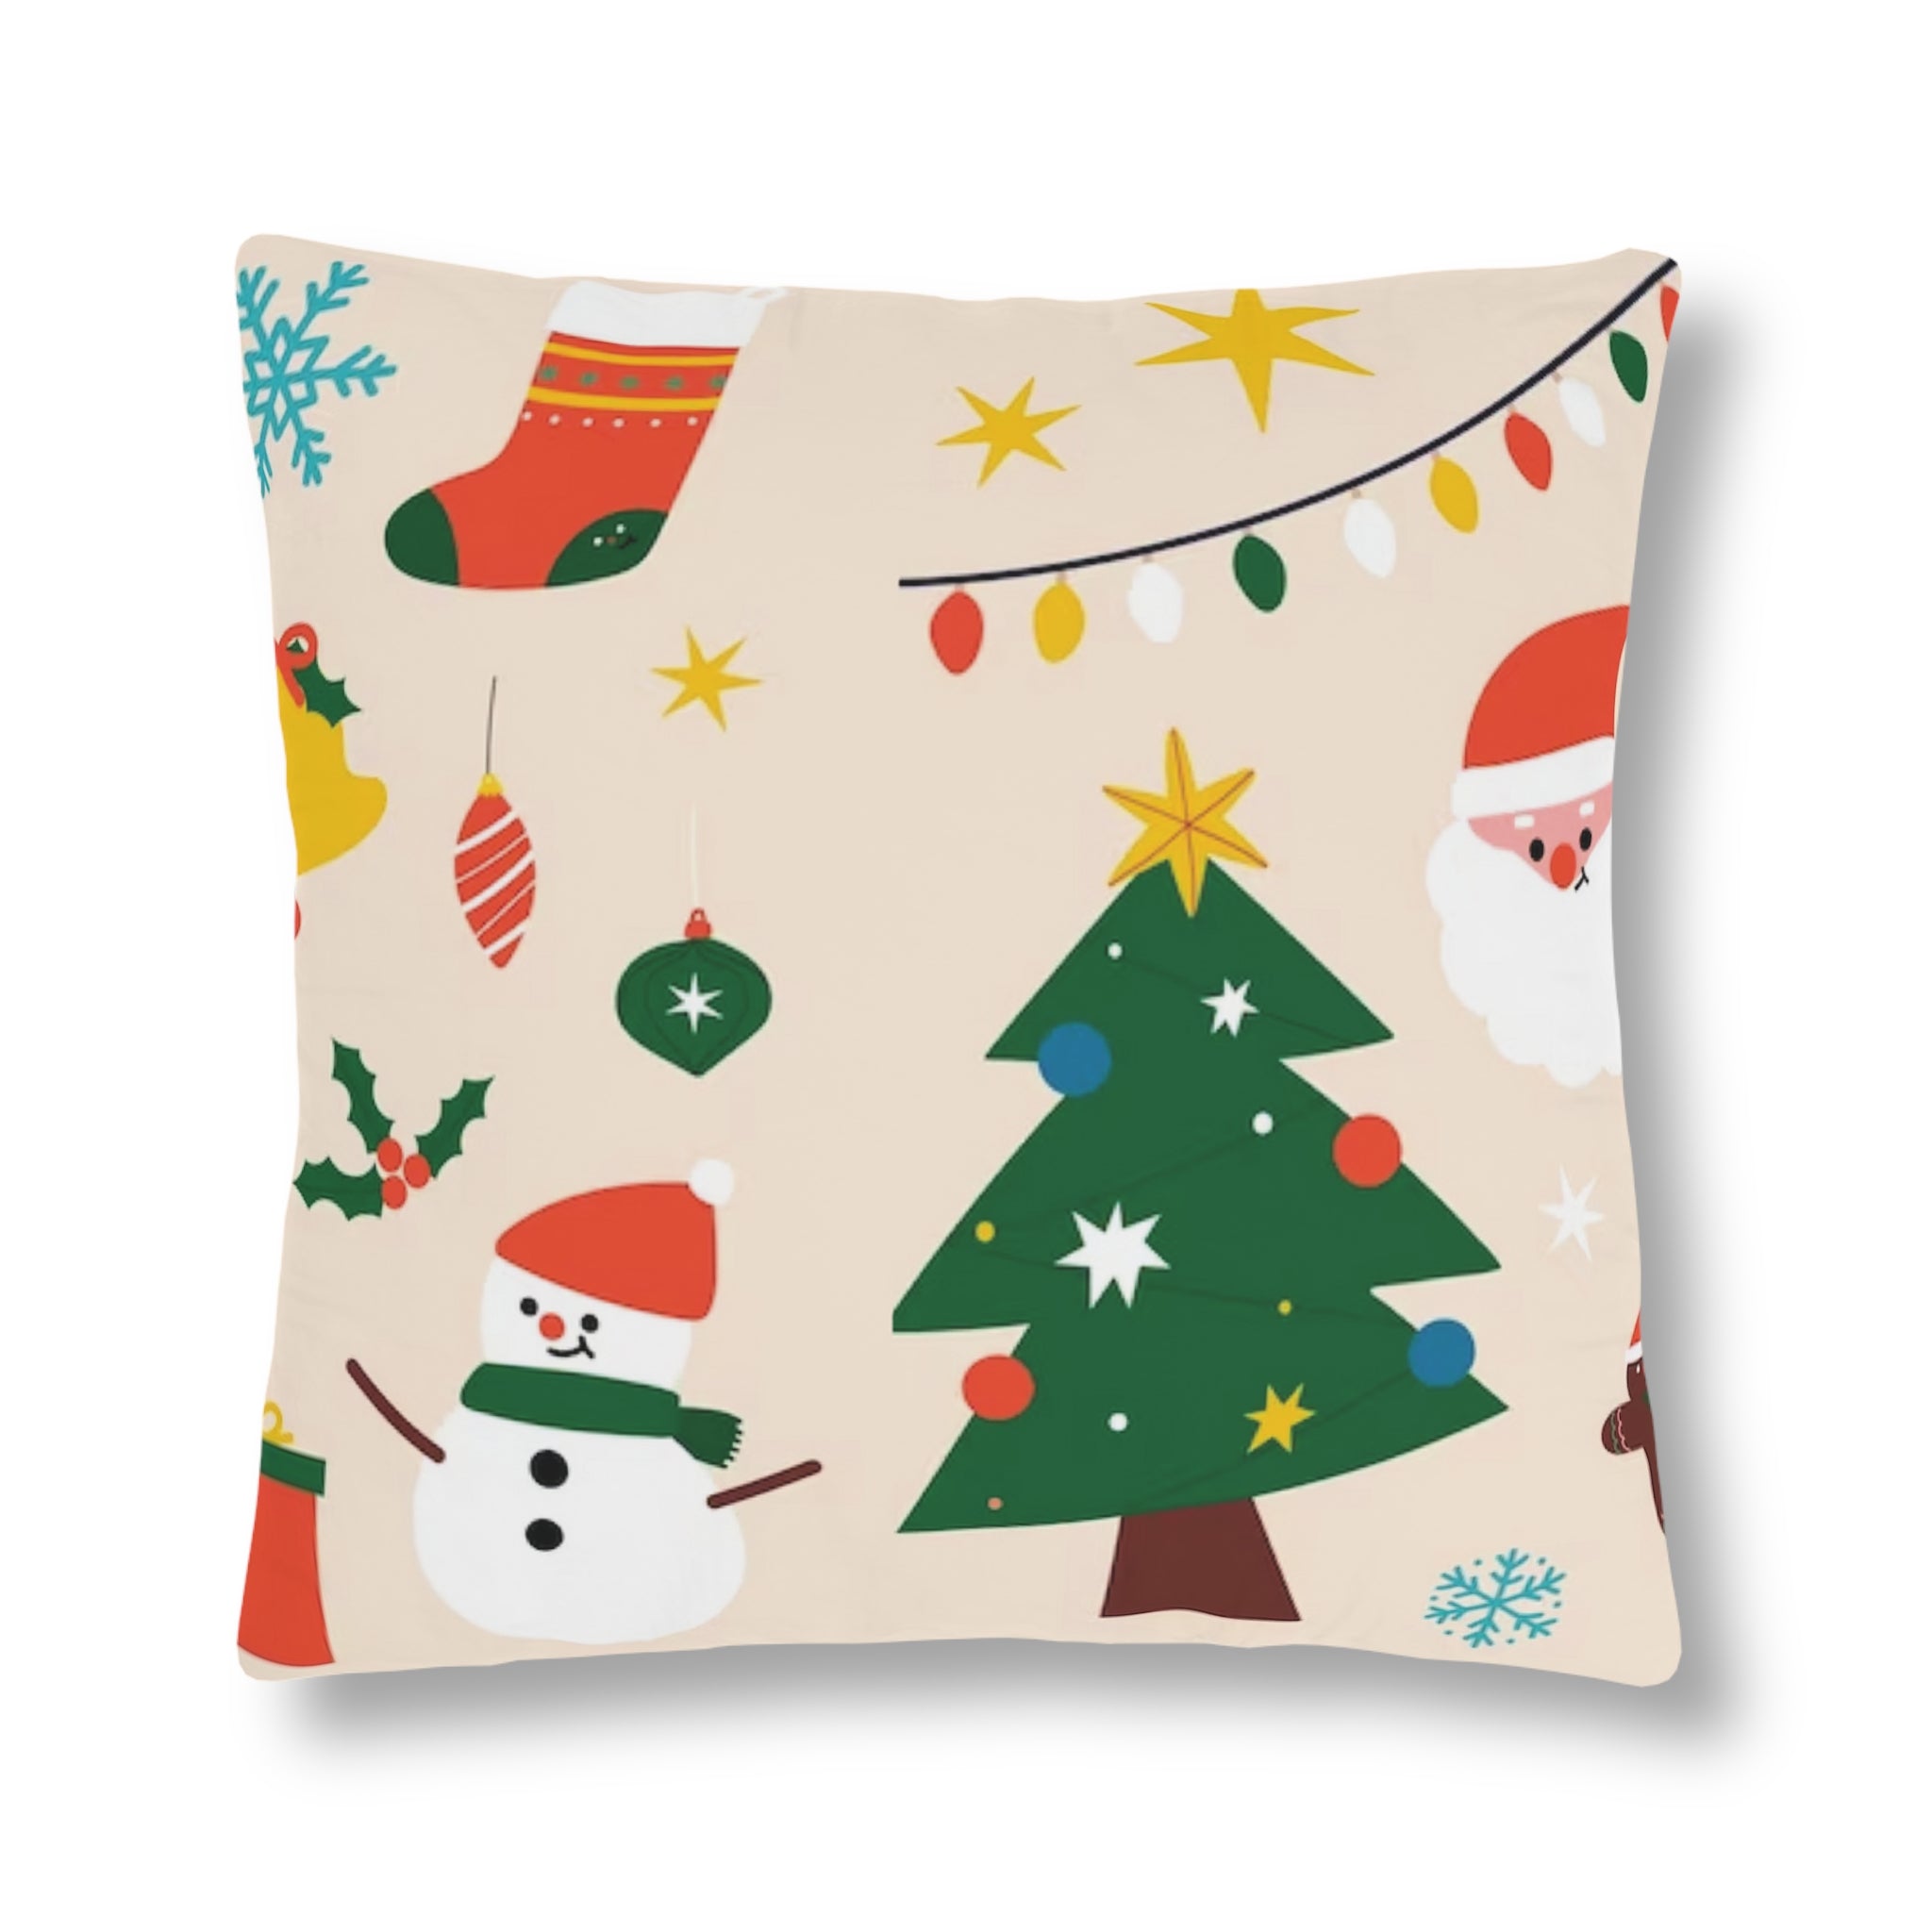 Christmas Waterproof Pillows, Biege - Infinite Pack